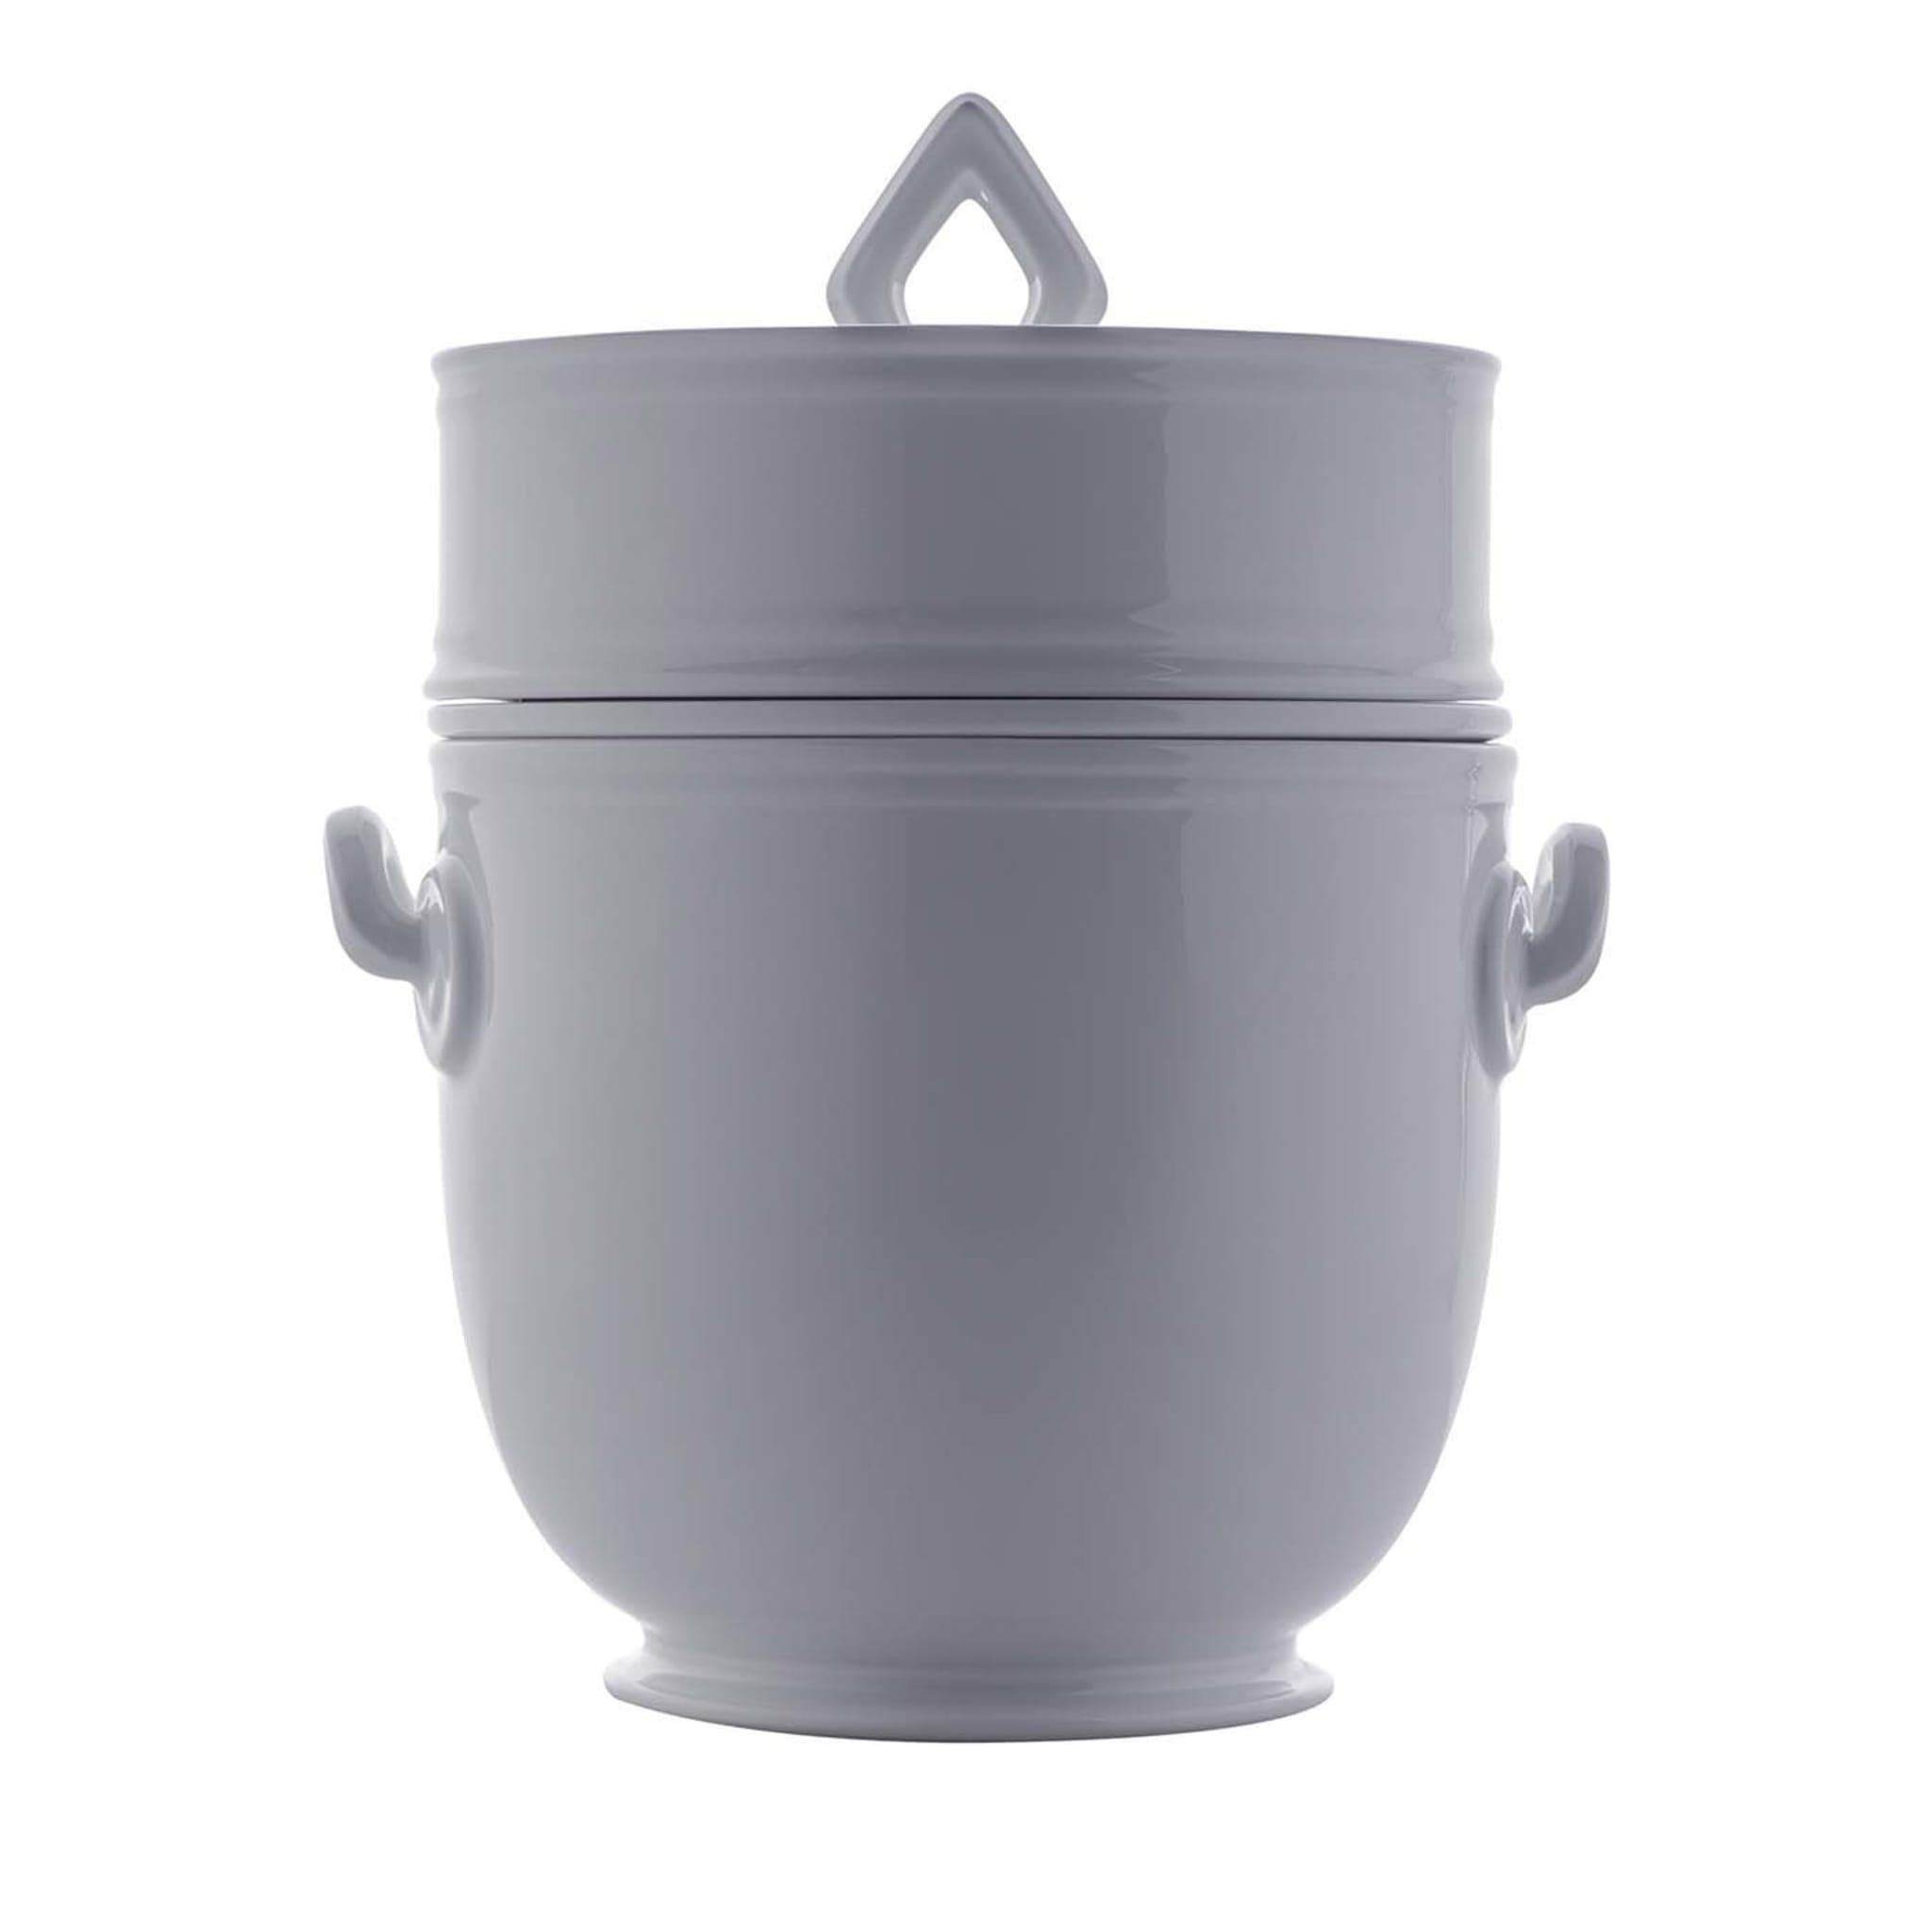 Fili Medium White Cooler/Ice Bucket with Lid - Main view